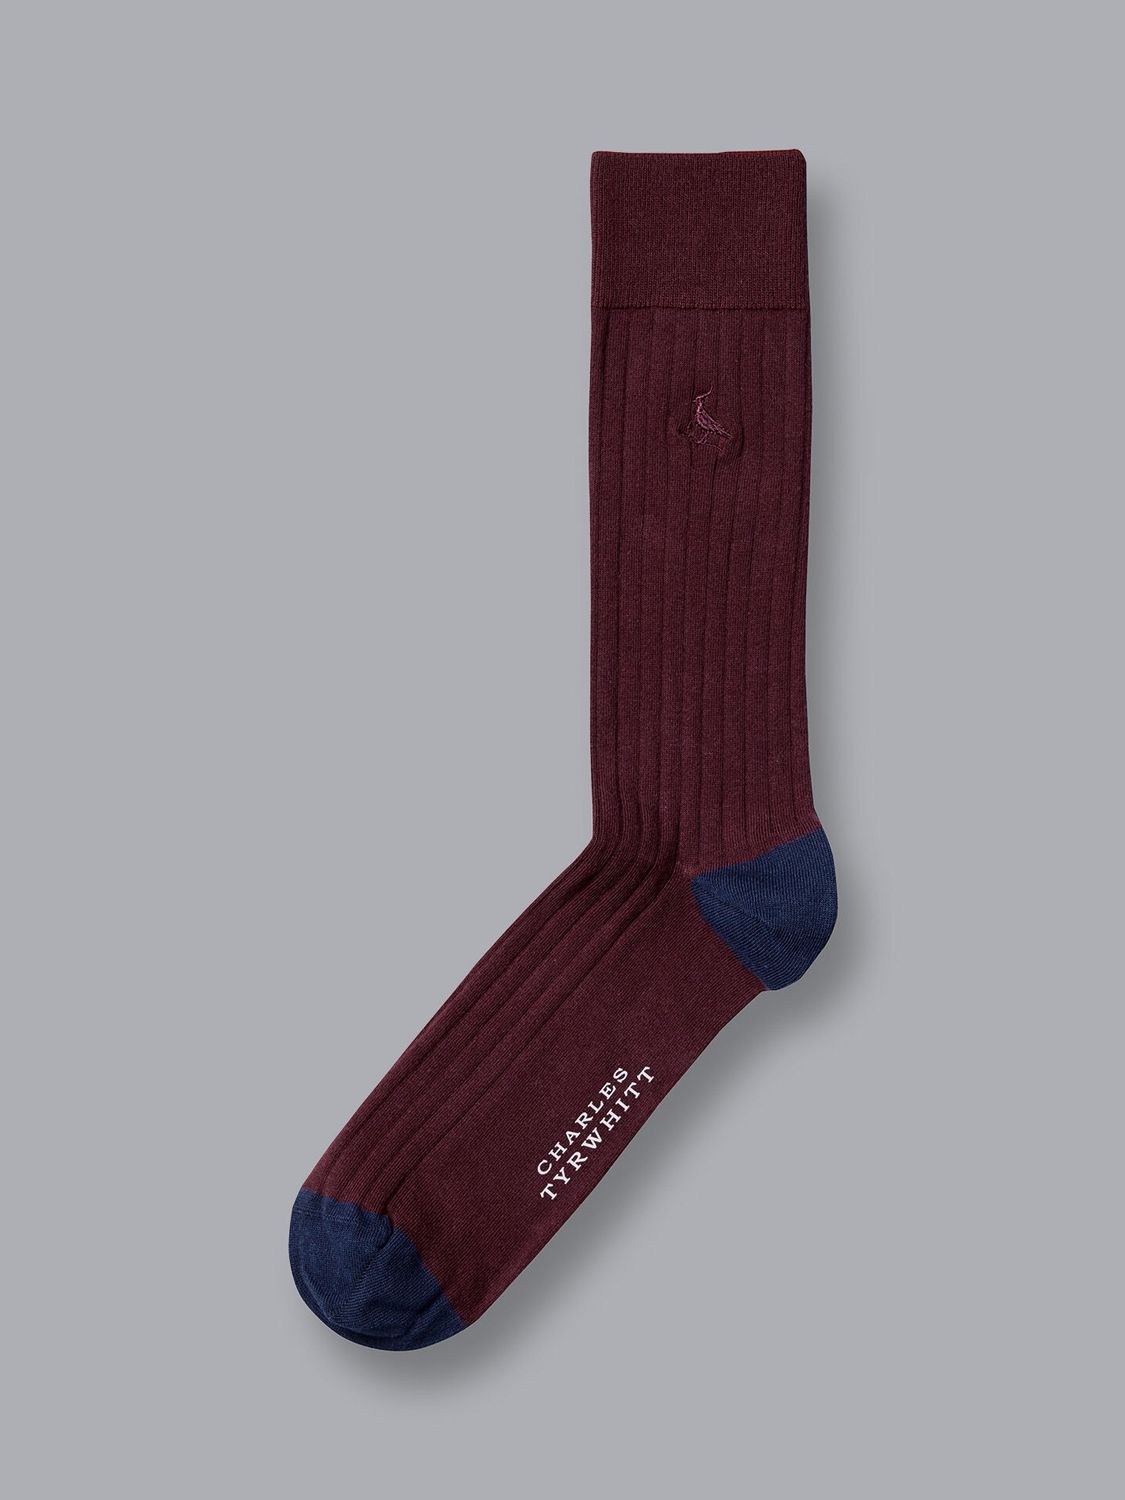 Buy Charles Tyrwhitt Indigo Blue Cotton Rib Socks Online at johnlewis.com